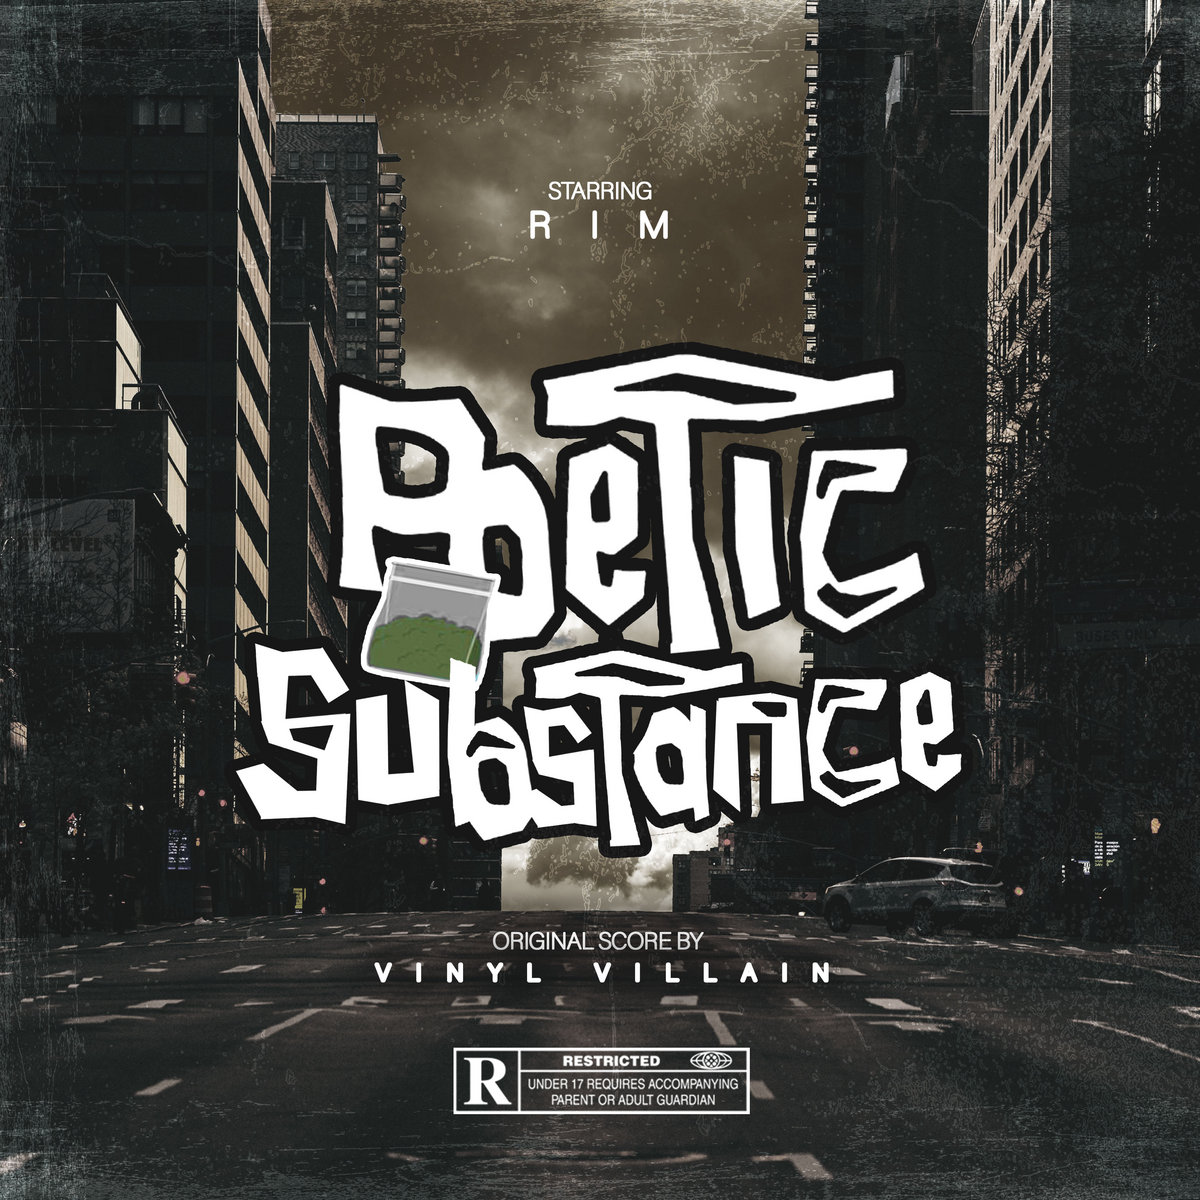 Rim_vinyl_villain_poetic_substance